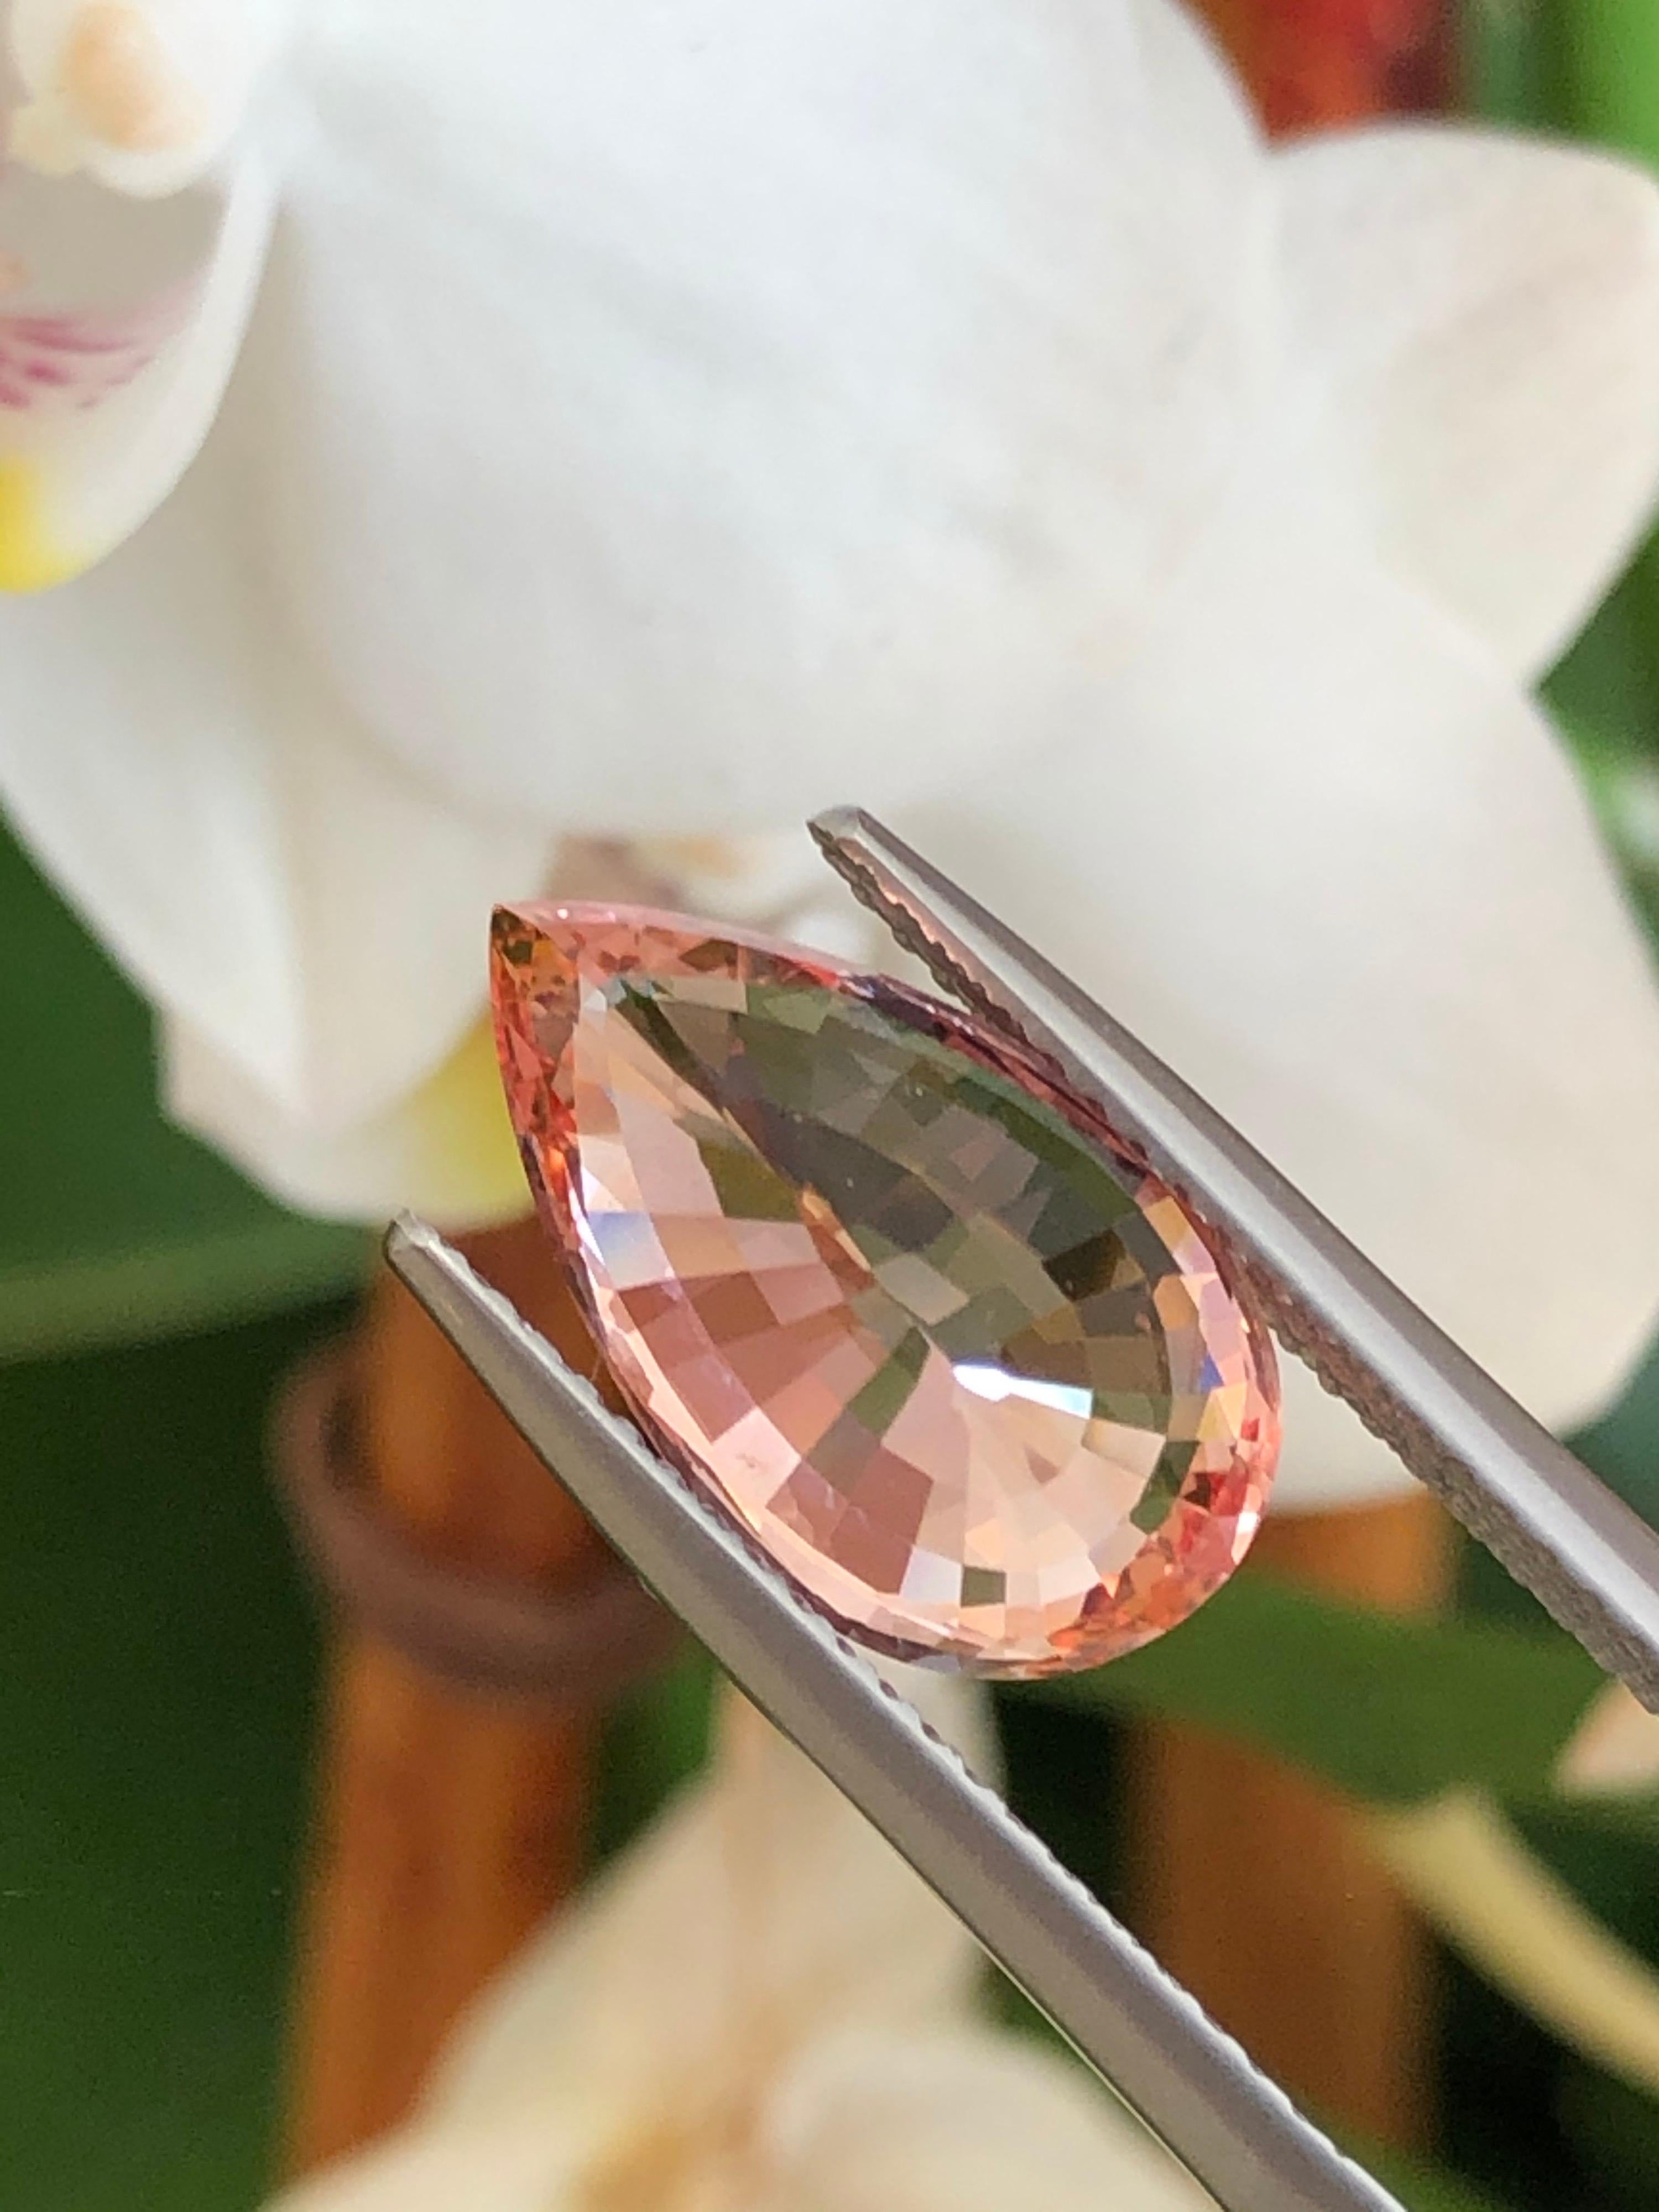 padparadscha sapphire gemstones